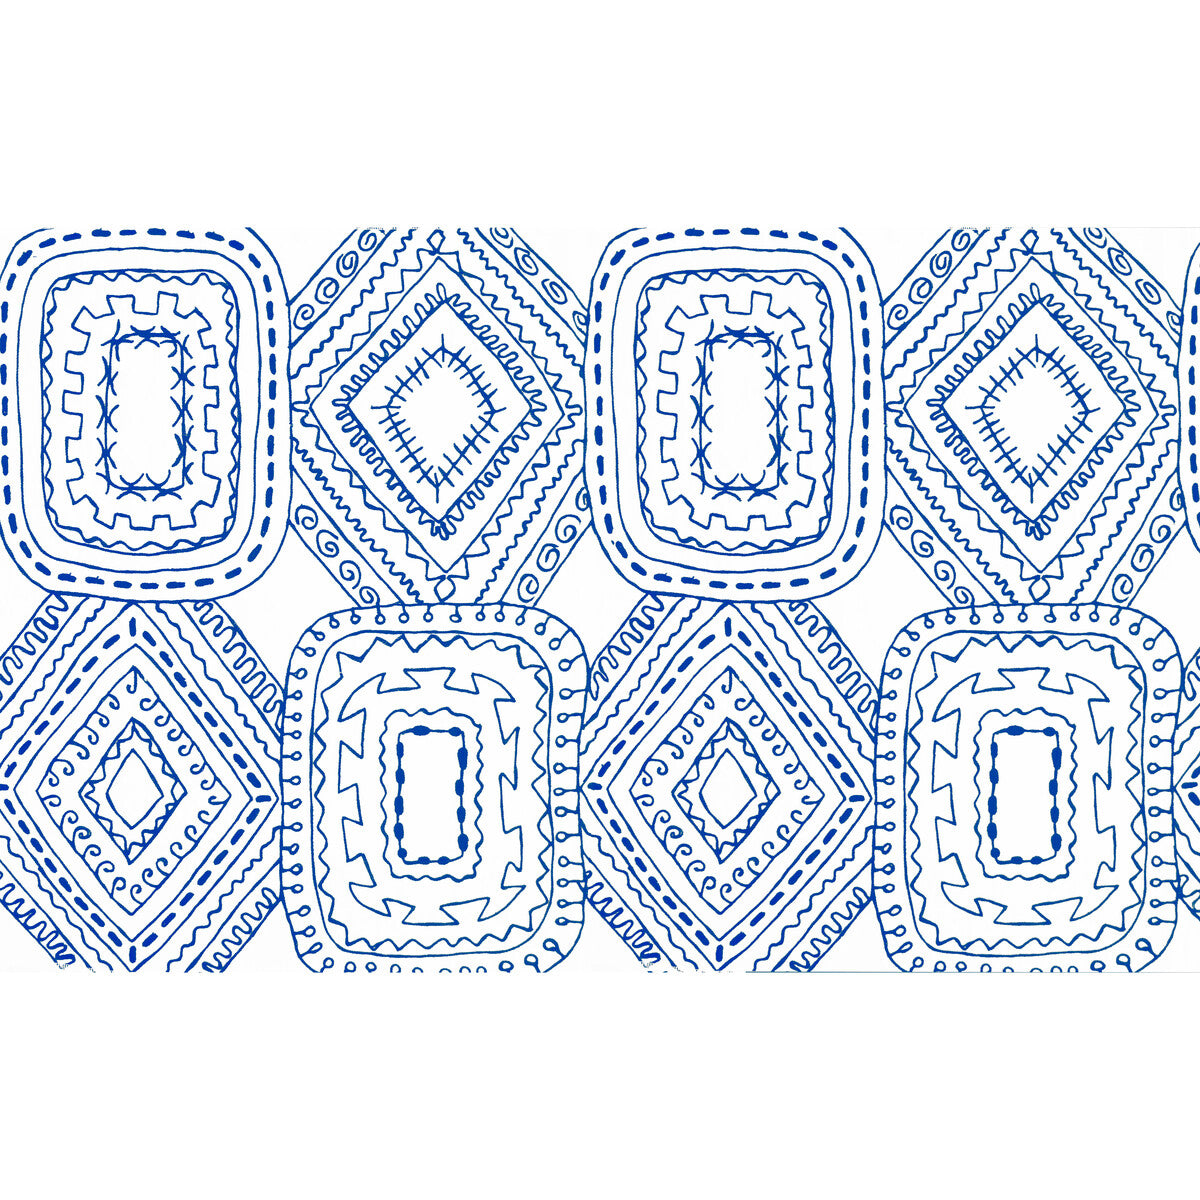 Santo Domingo fabric in azul color - pattern GDT5570.003.0 - by Gaston y Daniela in the Gaston Luis Bustamante collection